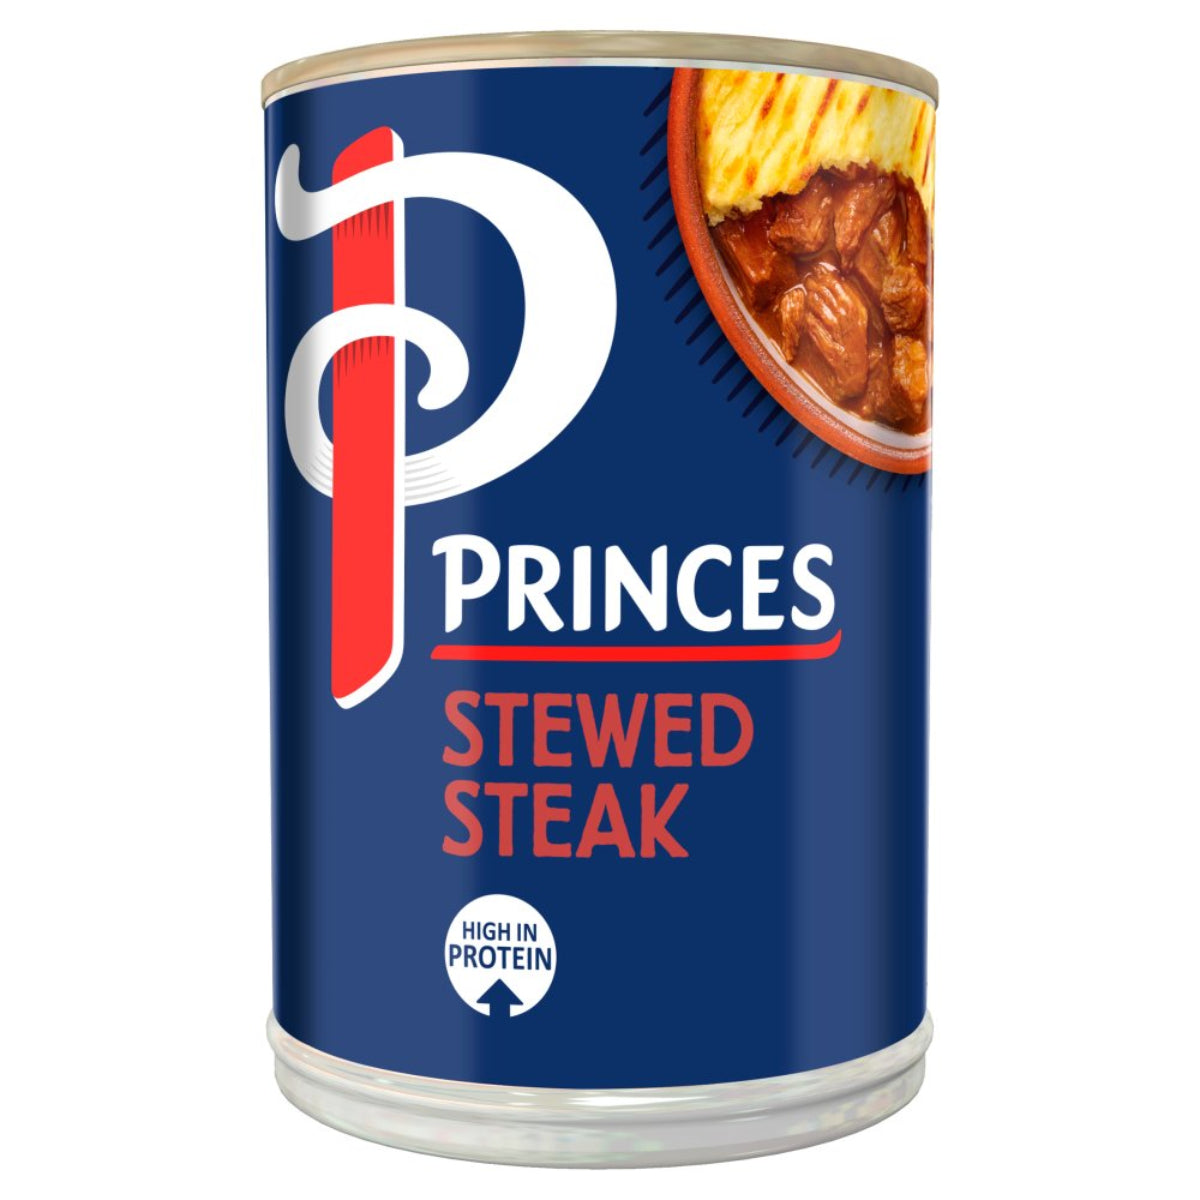 Princes - Stewed Steak - 392g - Continental Food Store